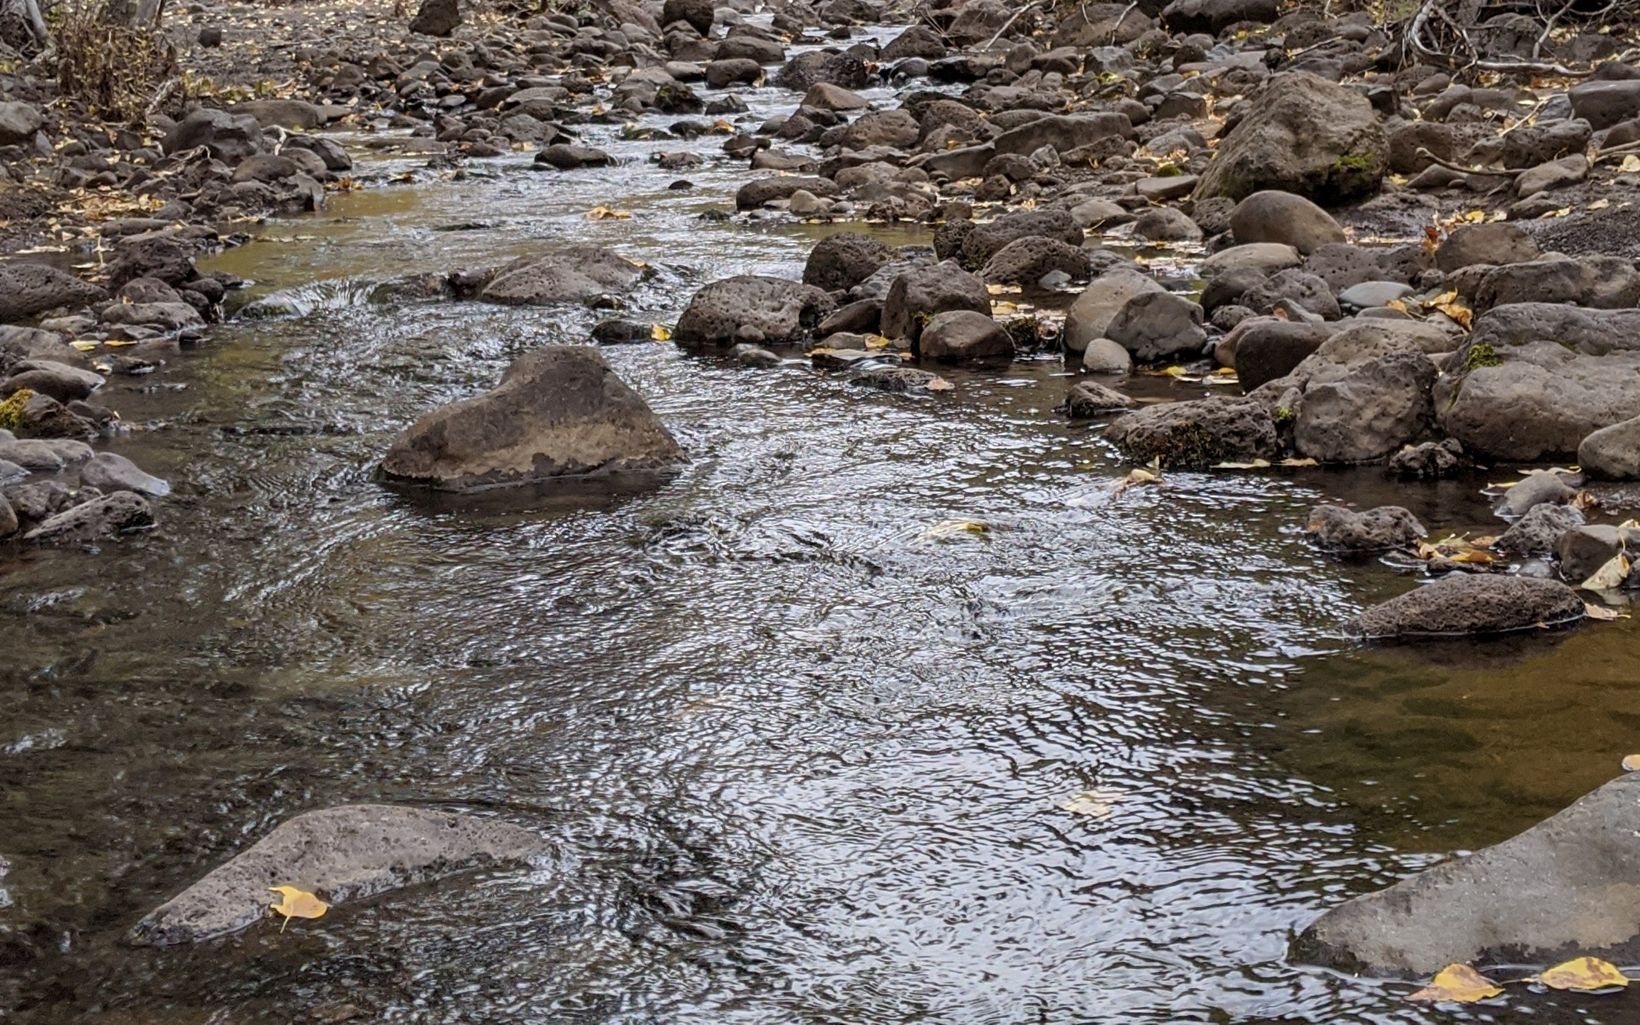 The Little Blitzen The Little Blitzen River relies on groundwater for its consistent flow. © Zach Freed